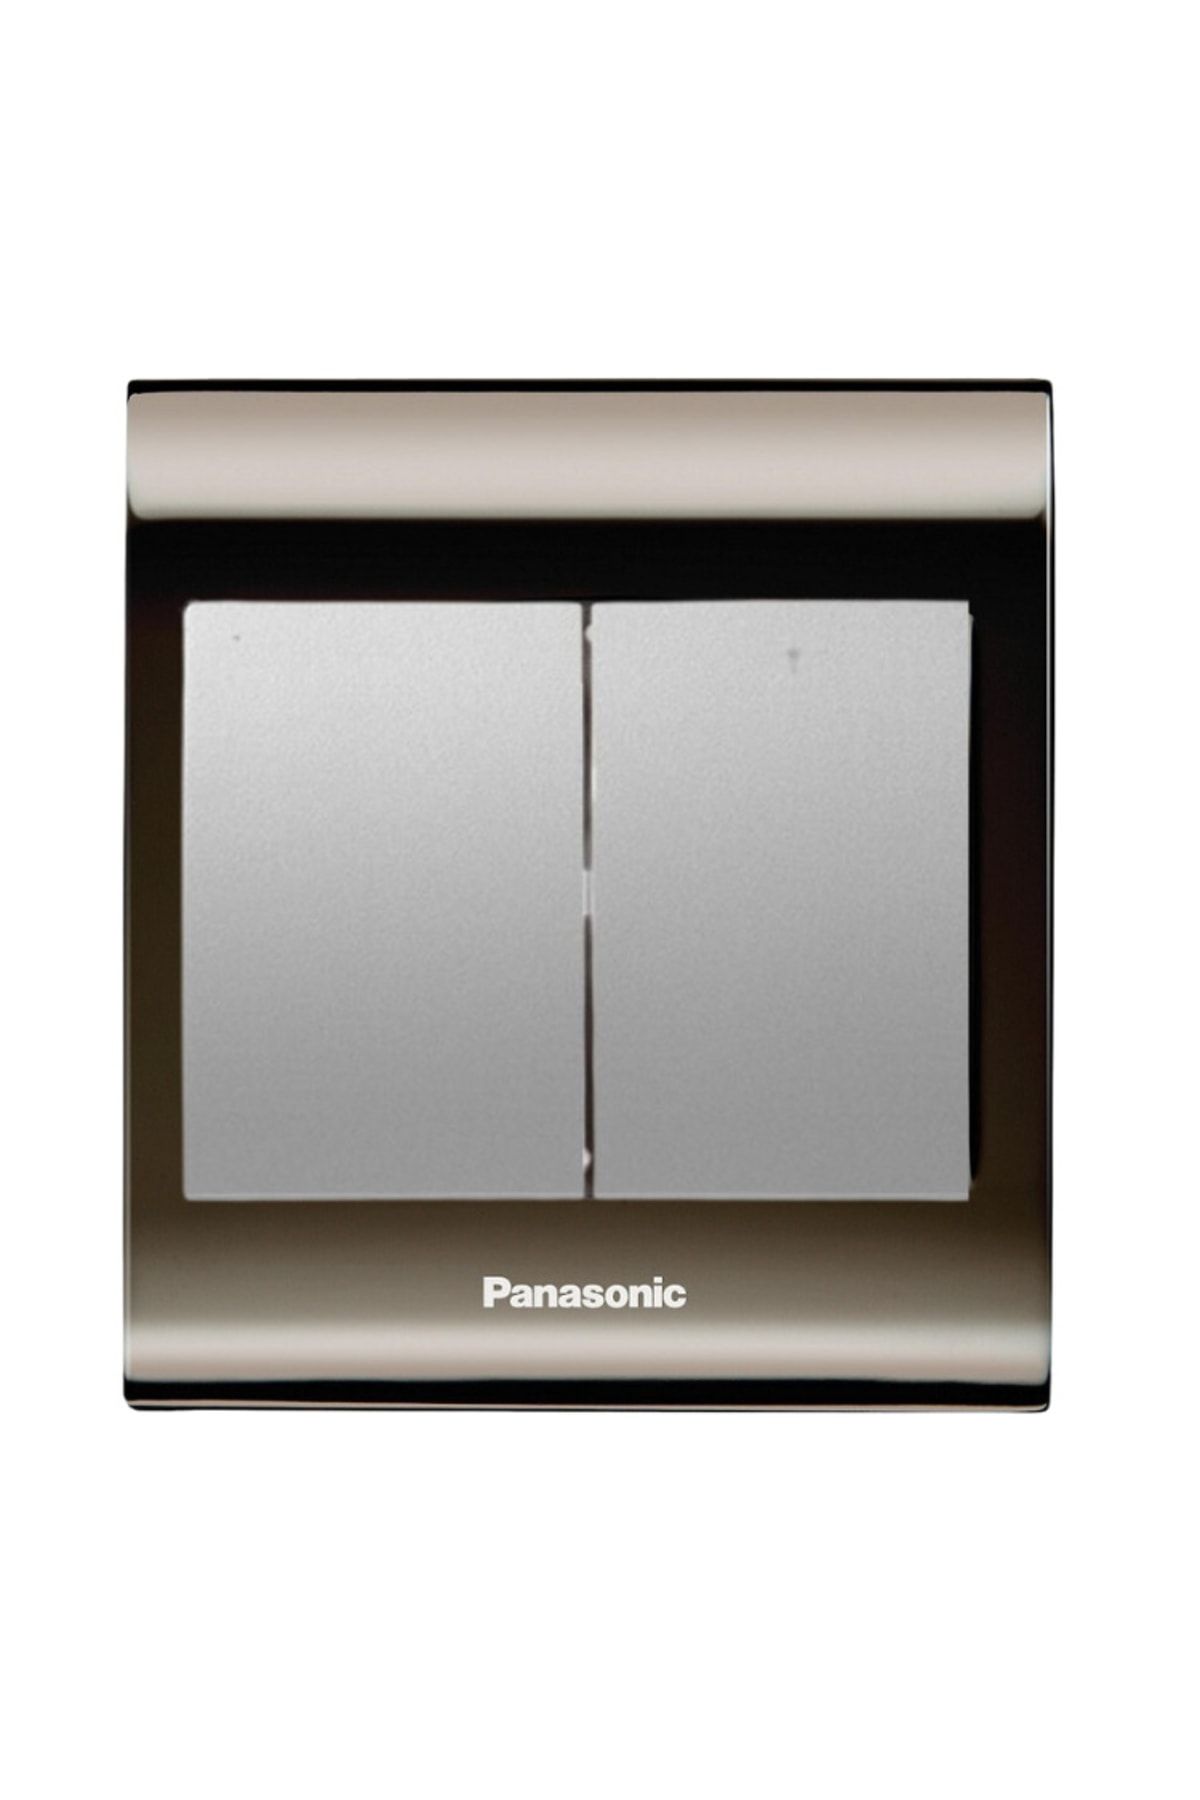 Panasonic Viko Thea Blu Ikili Anahtar, Çerçeve Una+füme, Kapak Metalik Beyaz